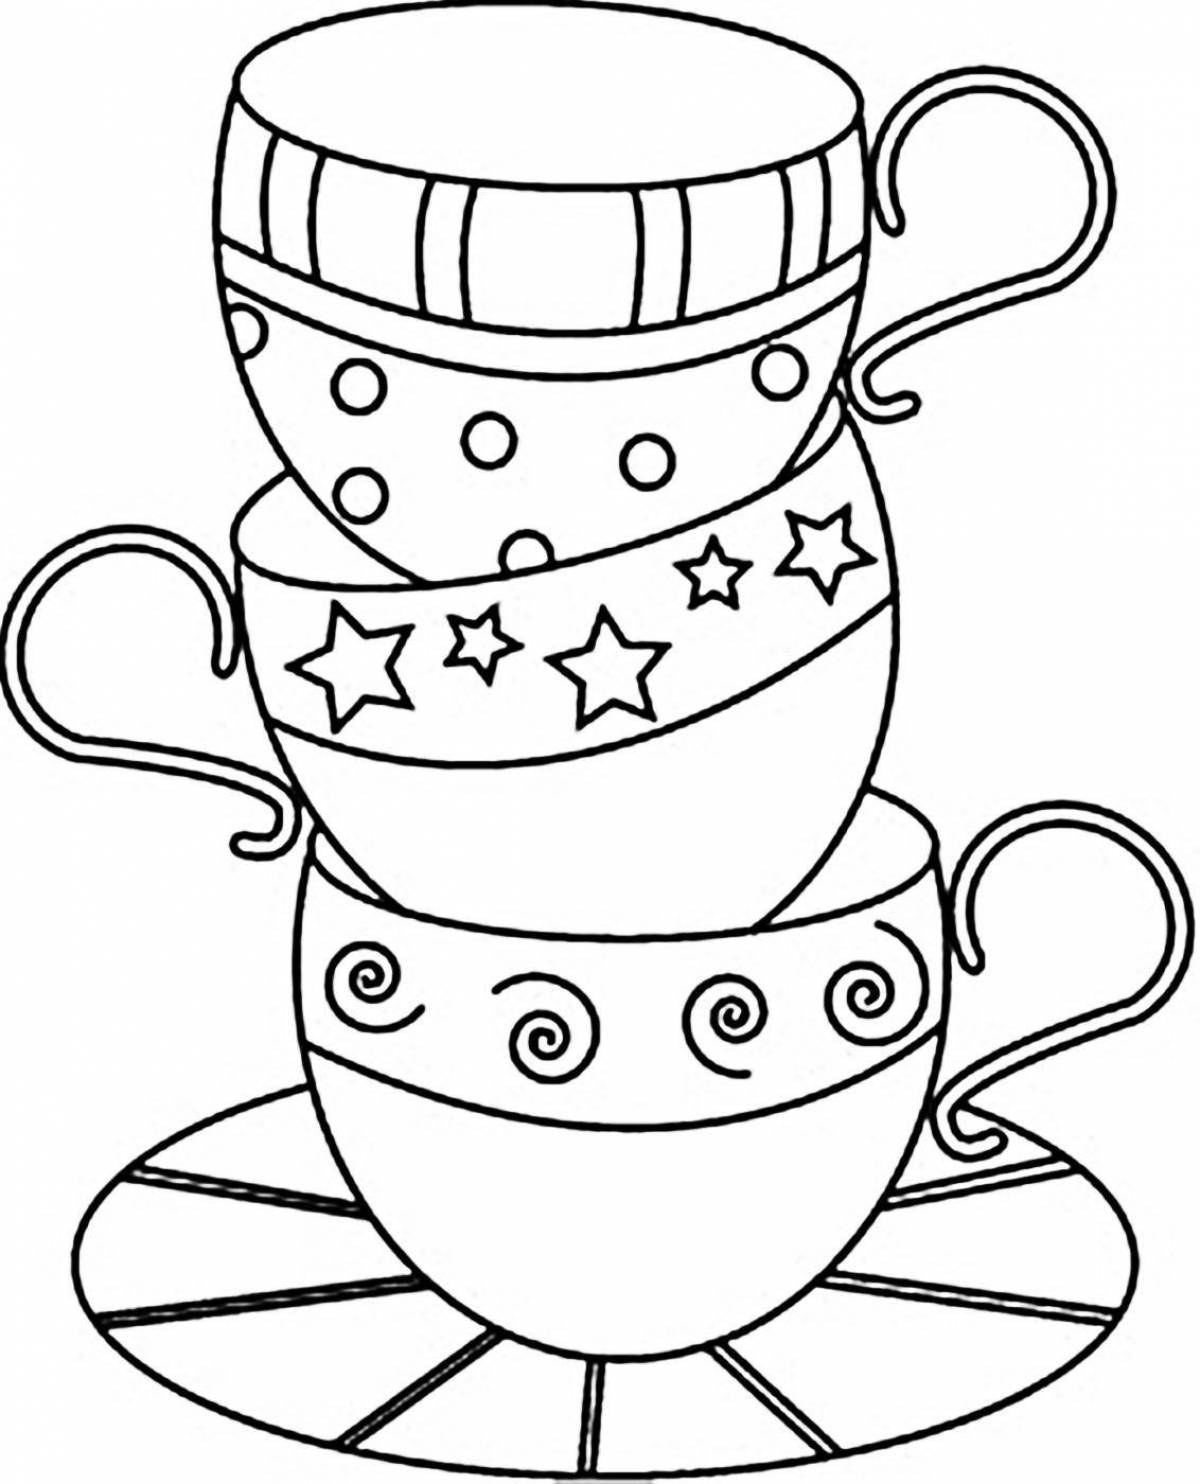 Adorable polka dot mug coloring book